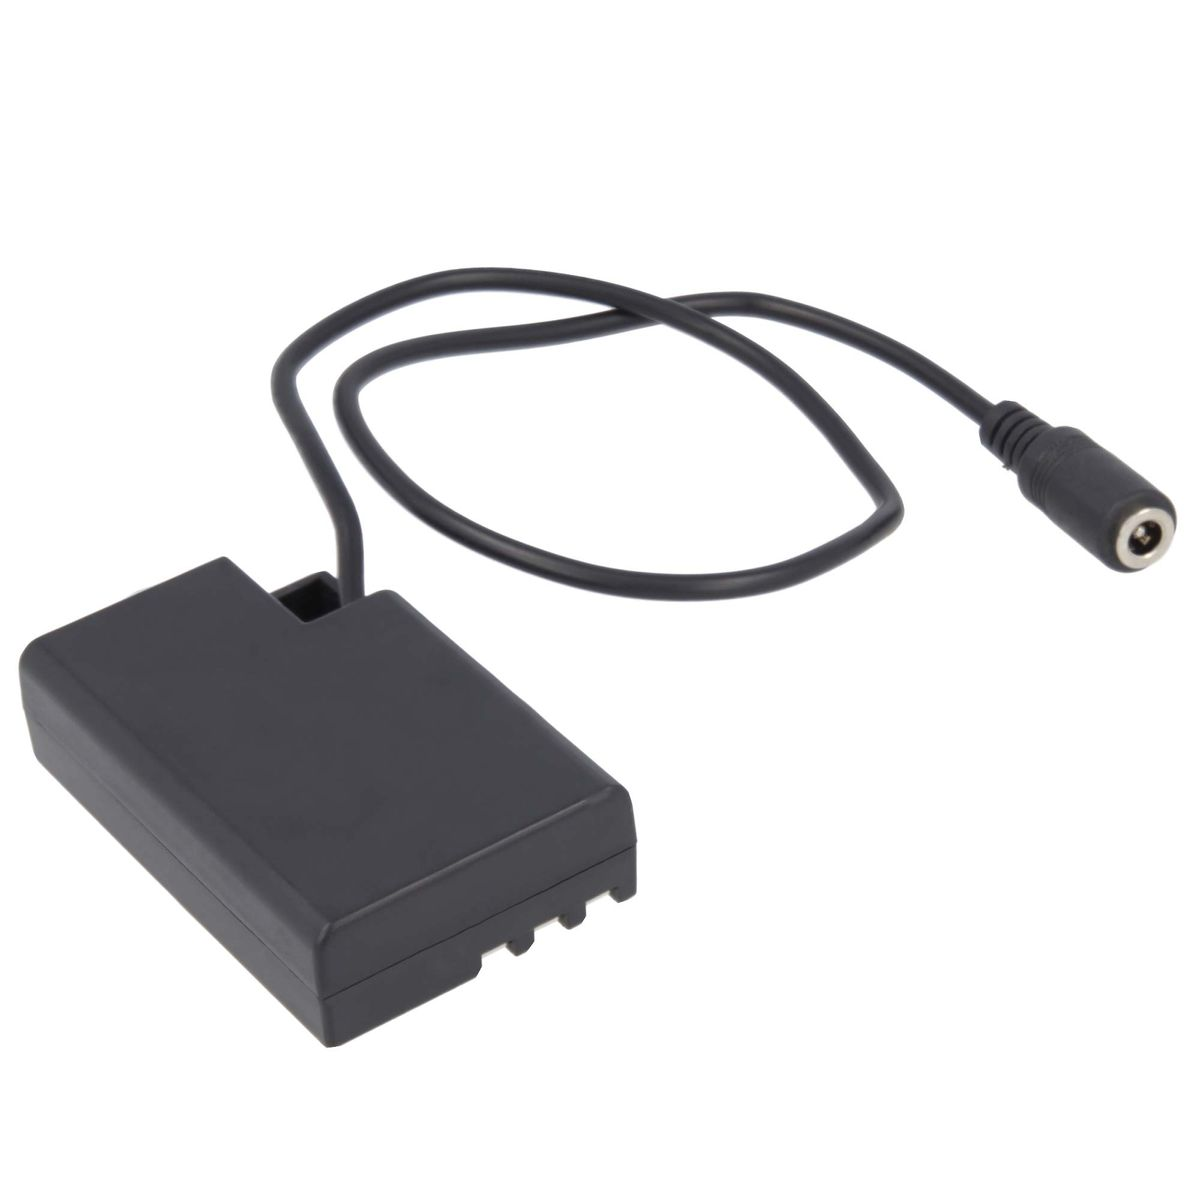 AKKU-KING USB-C Pentax, kompatibel keine D-DC128 + Kuppler Adapter Pentax Ladegerät mit Angabe